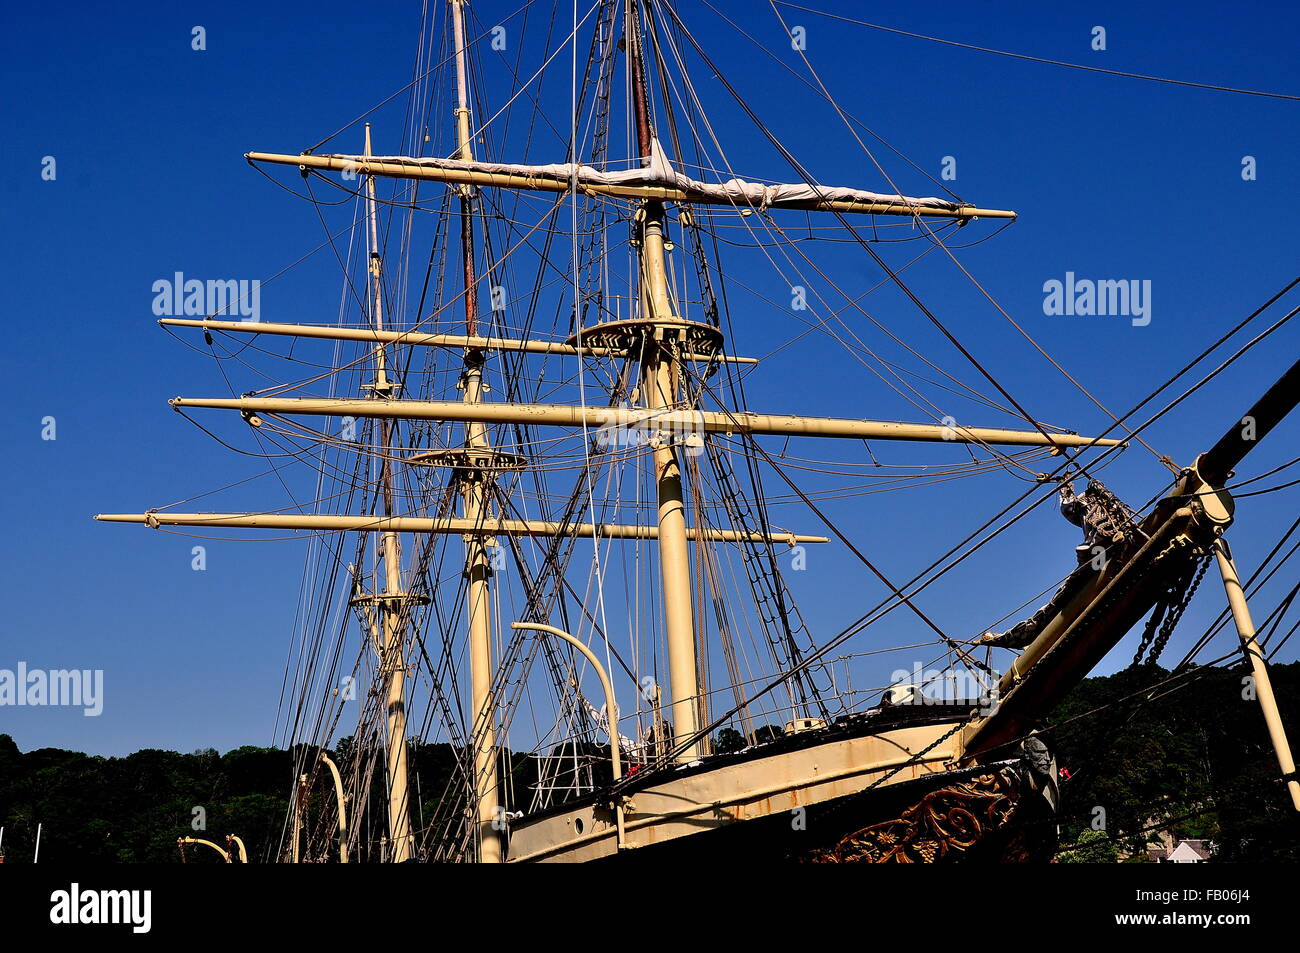 Mystic, Connecticut:  The 1882 three masted full-rigged sailing ship Joseph Conrad at the Mystic Seaport Museum Stock Photo